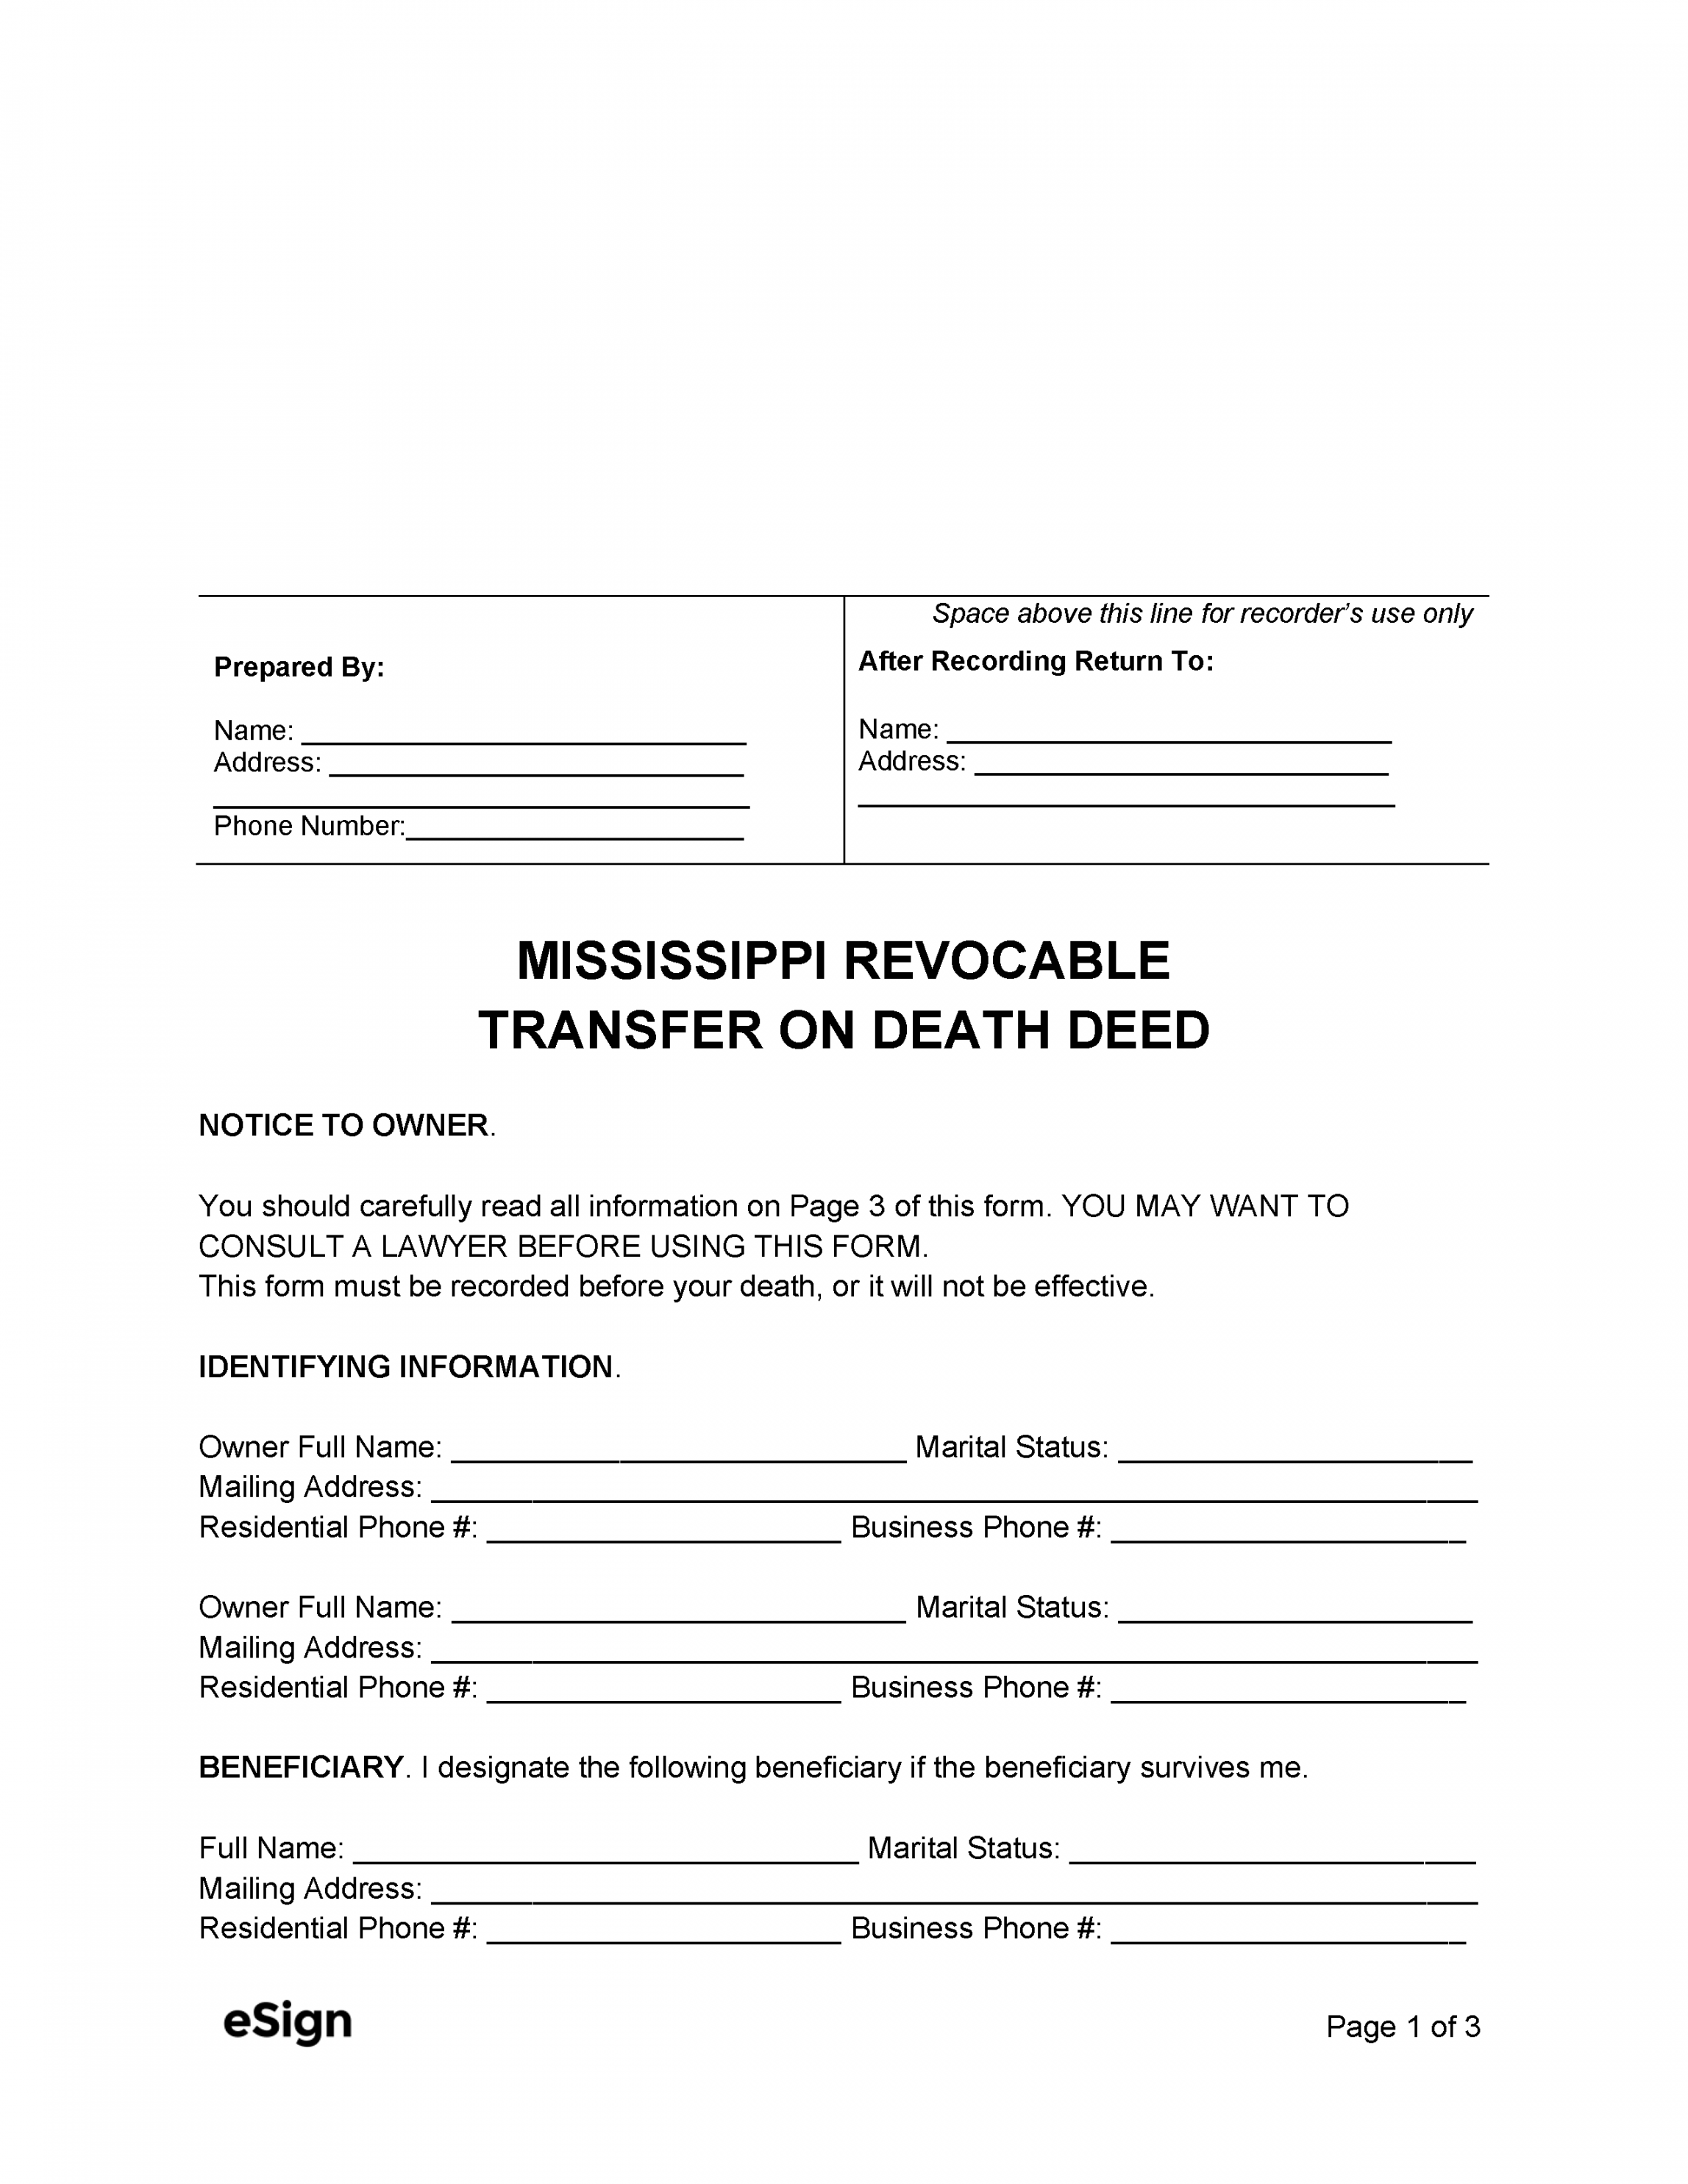 Free Printable Transfer On Death Deed Form - Printable - Free Mississippi Transfer on Death Deed Form  PDF  Word